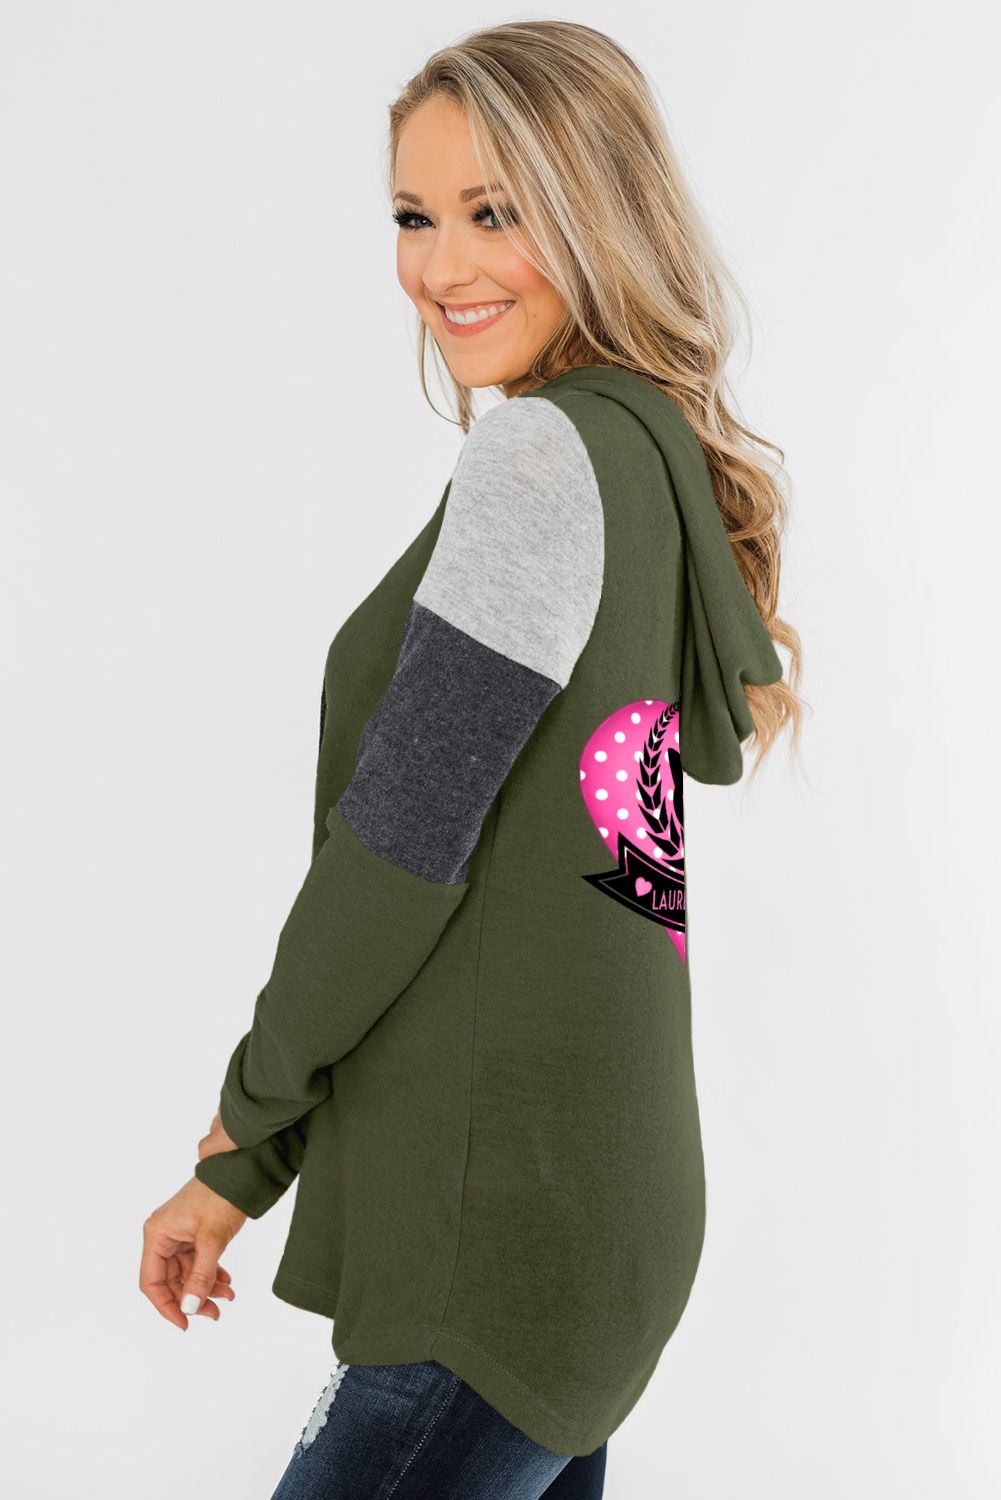 LaurenNichole Women's Soft Cozy Woolen Color Block Hoodie